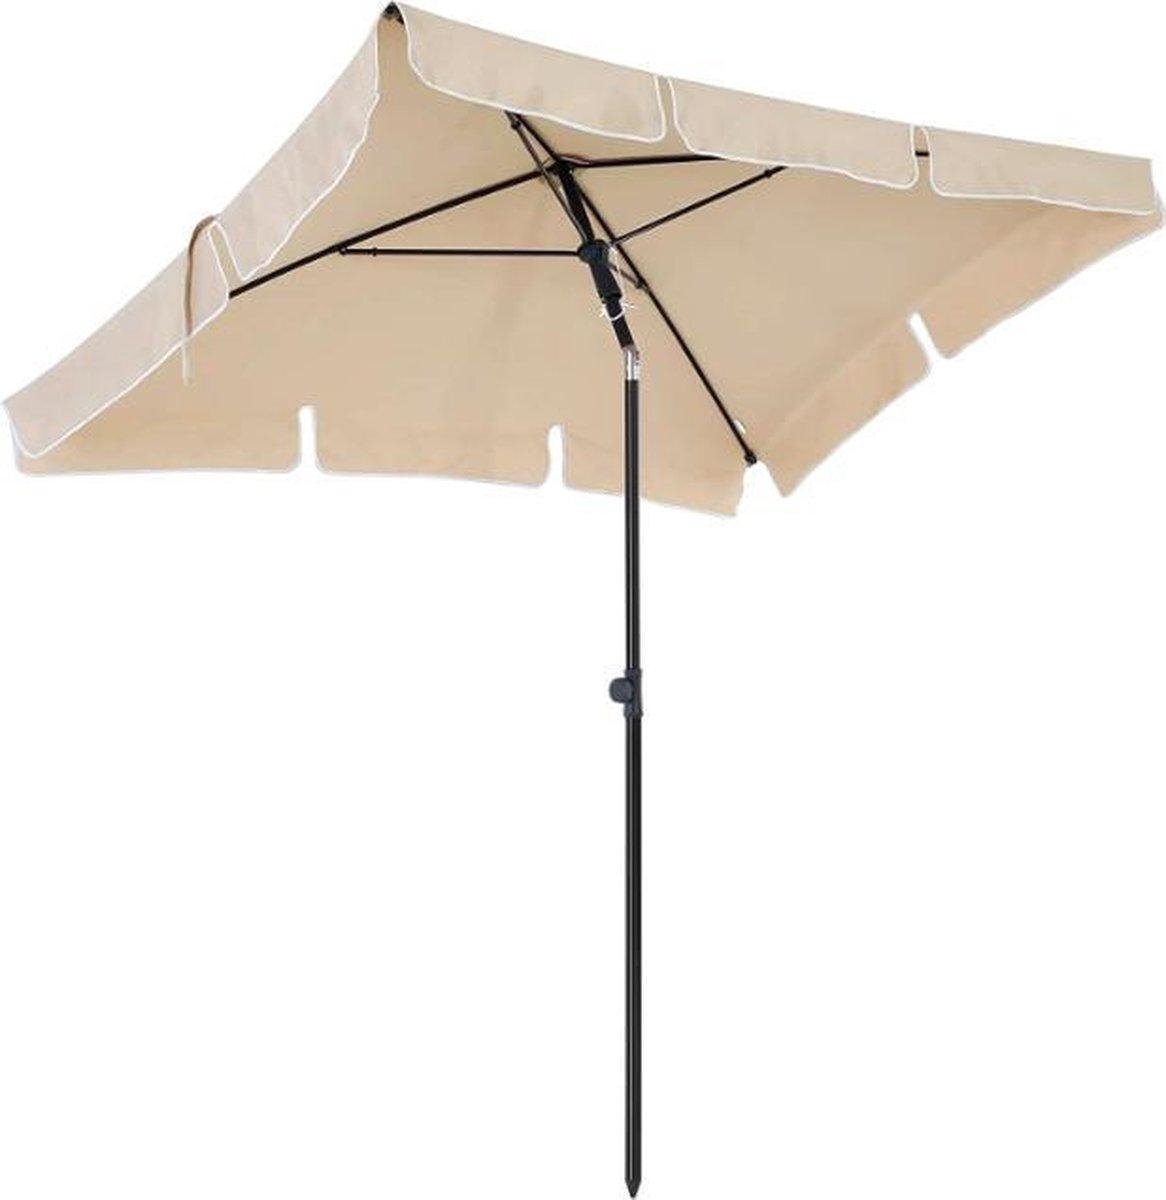 MAZAZU MIRA Parasol - Kantelbaar - Met draagtas - Zonnescherm - Zonder voetstuk - 200 x 125 cm - Taup